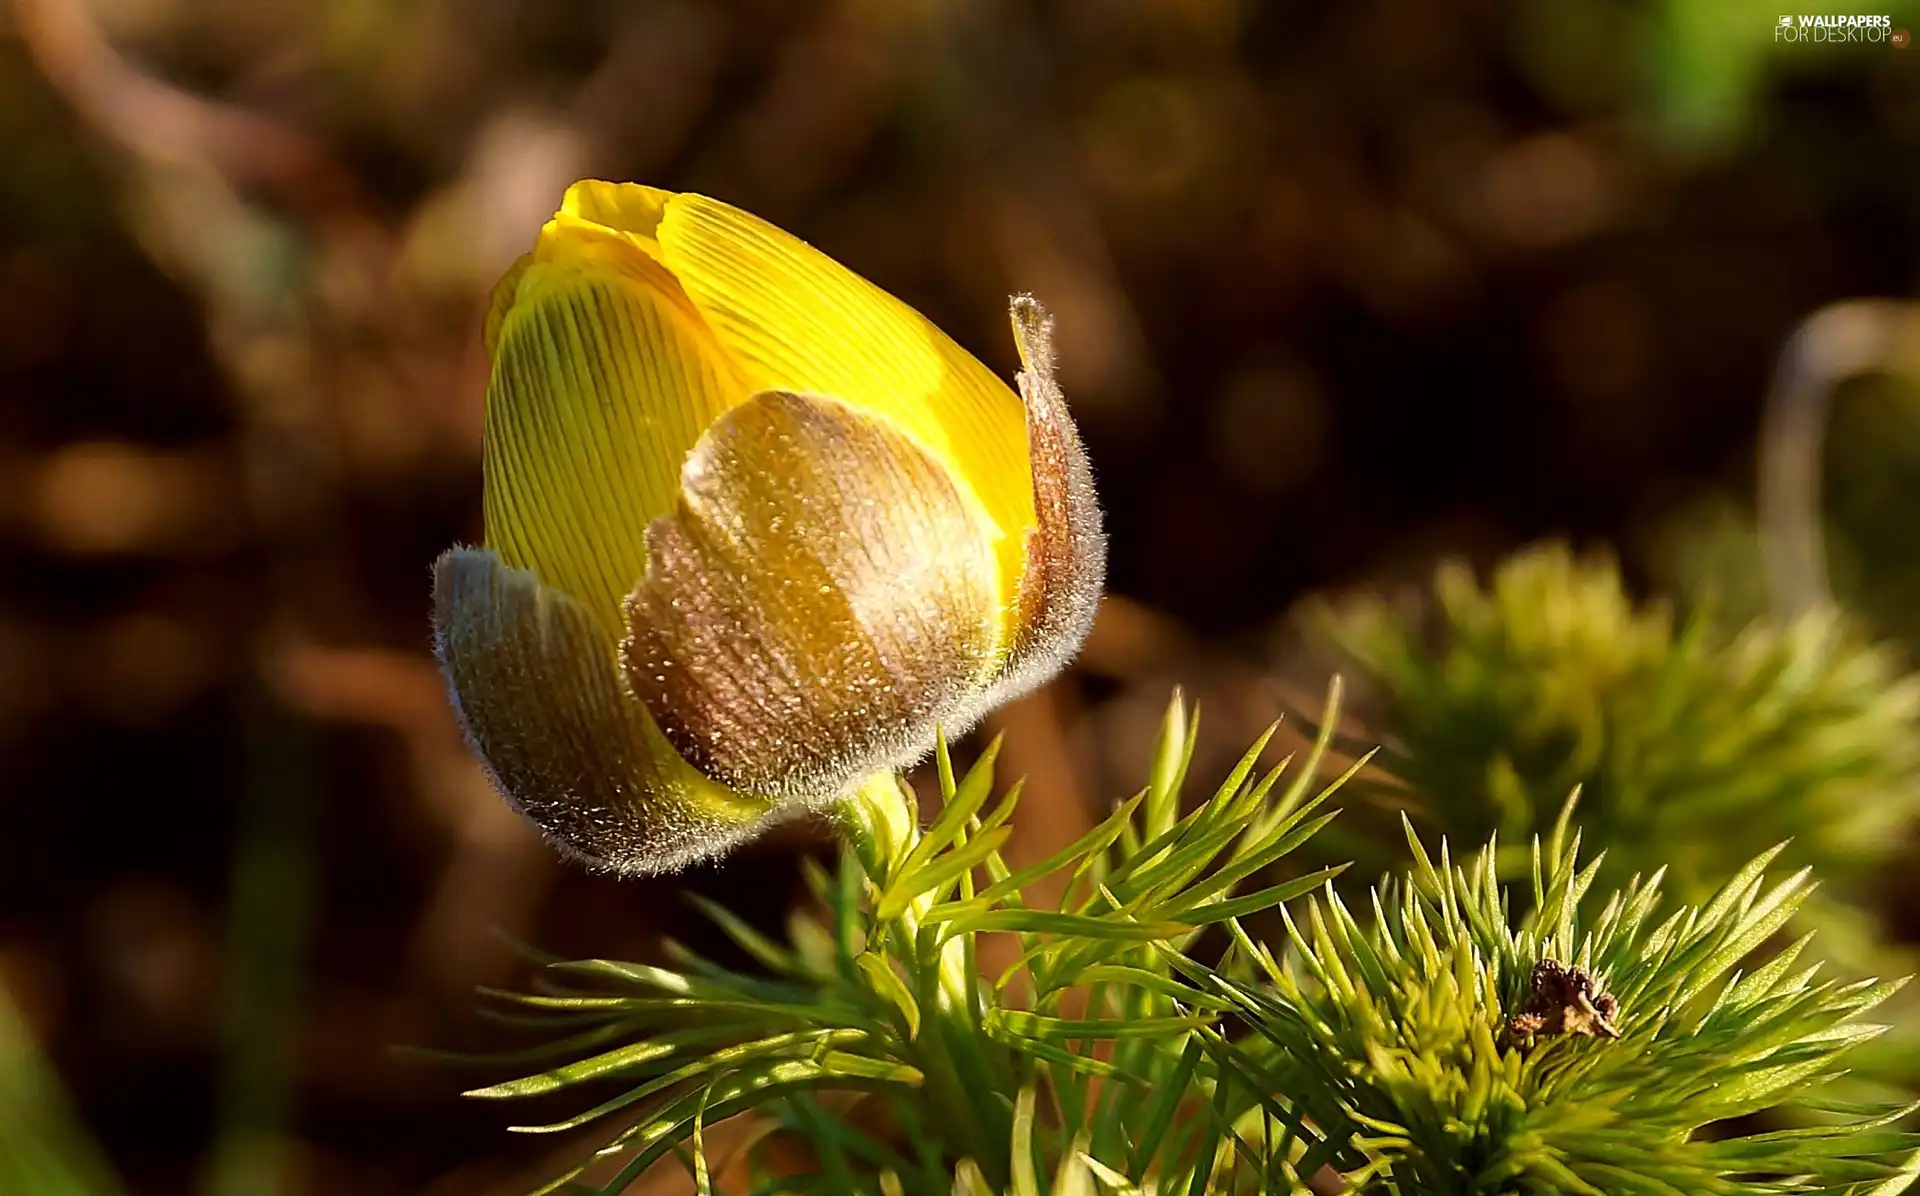 Yellow, bud, Close, anemone